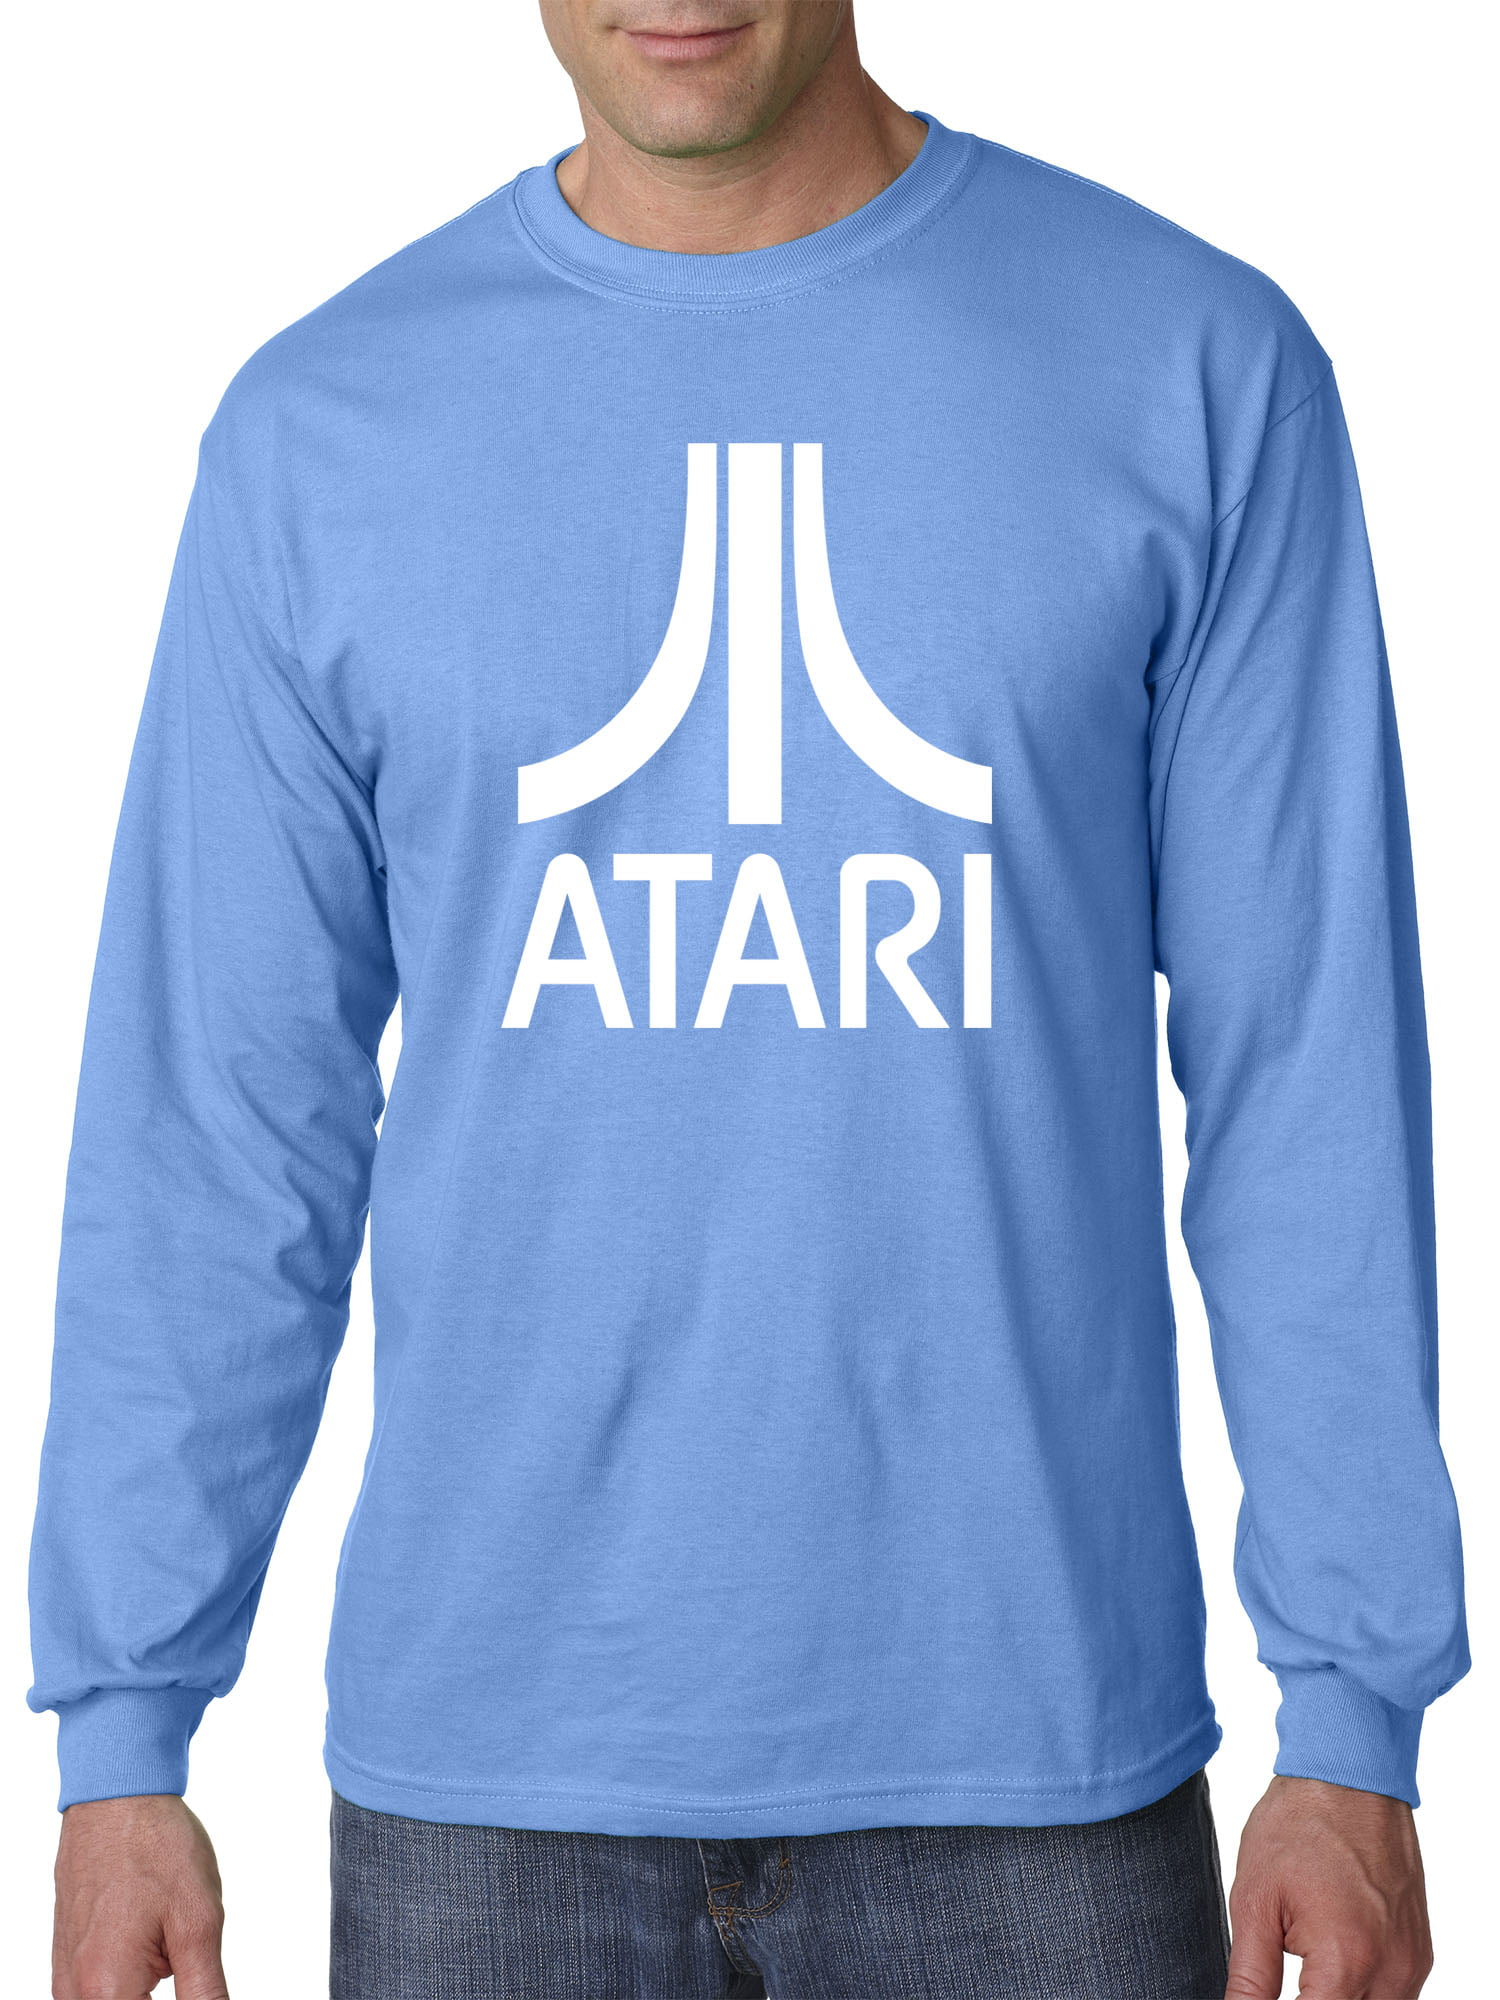 Atari Player Unisex Toddler T Shirt for Boys and Girls